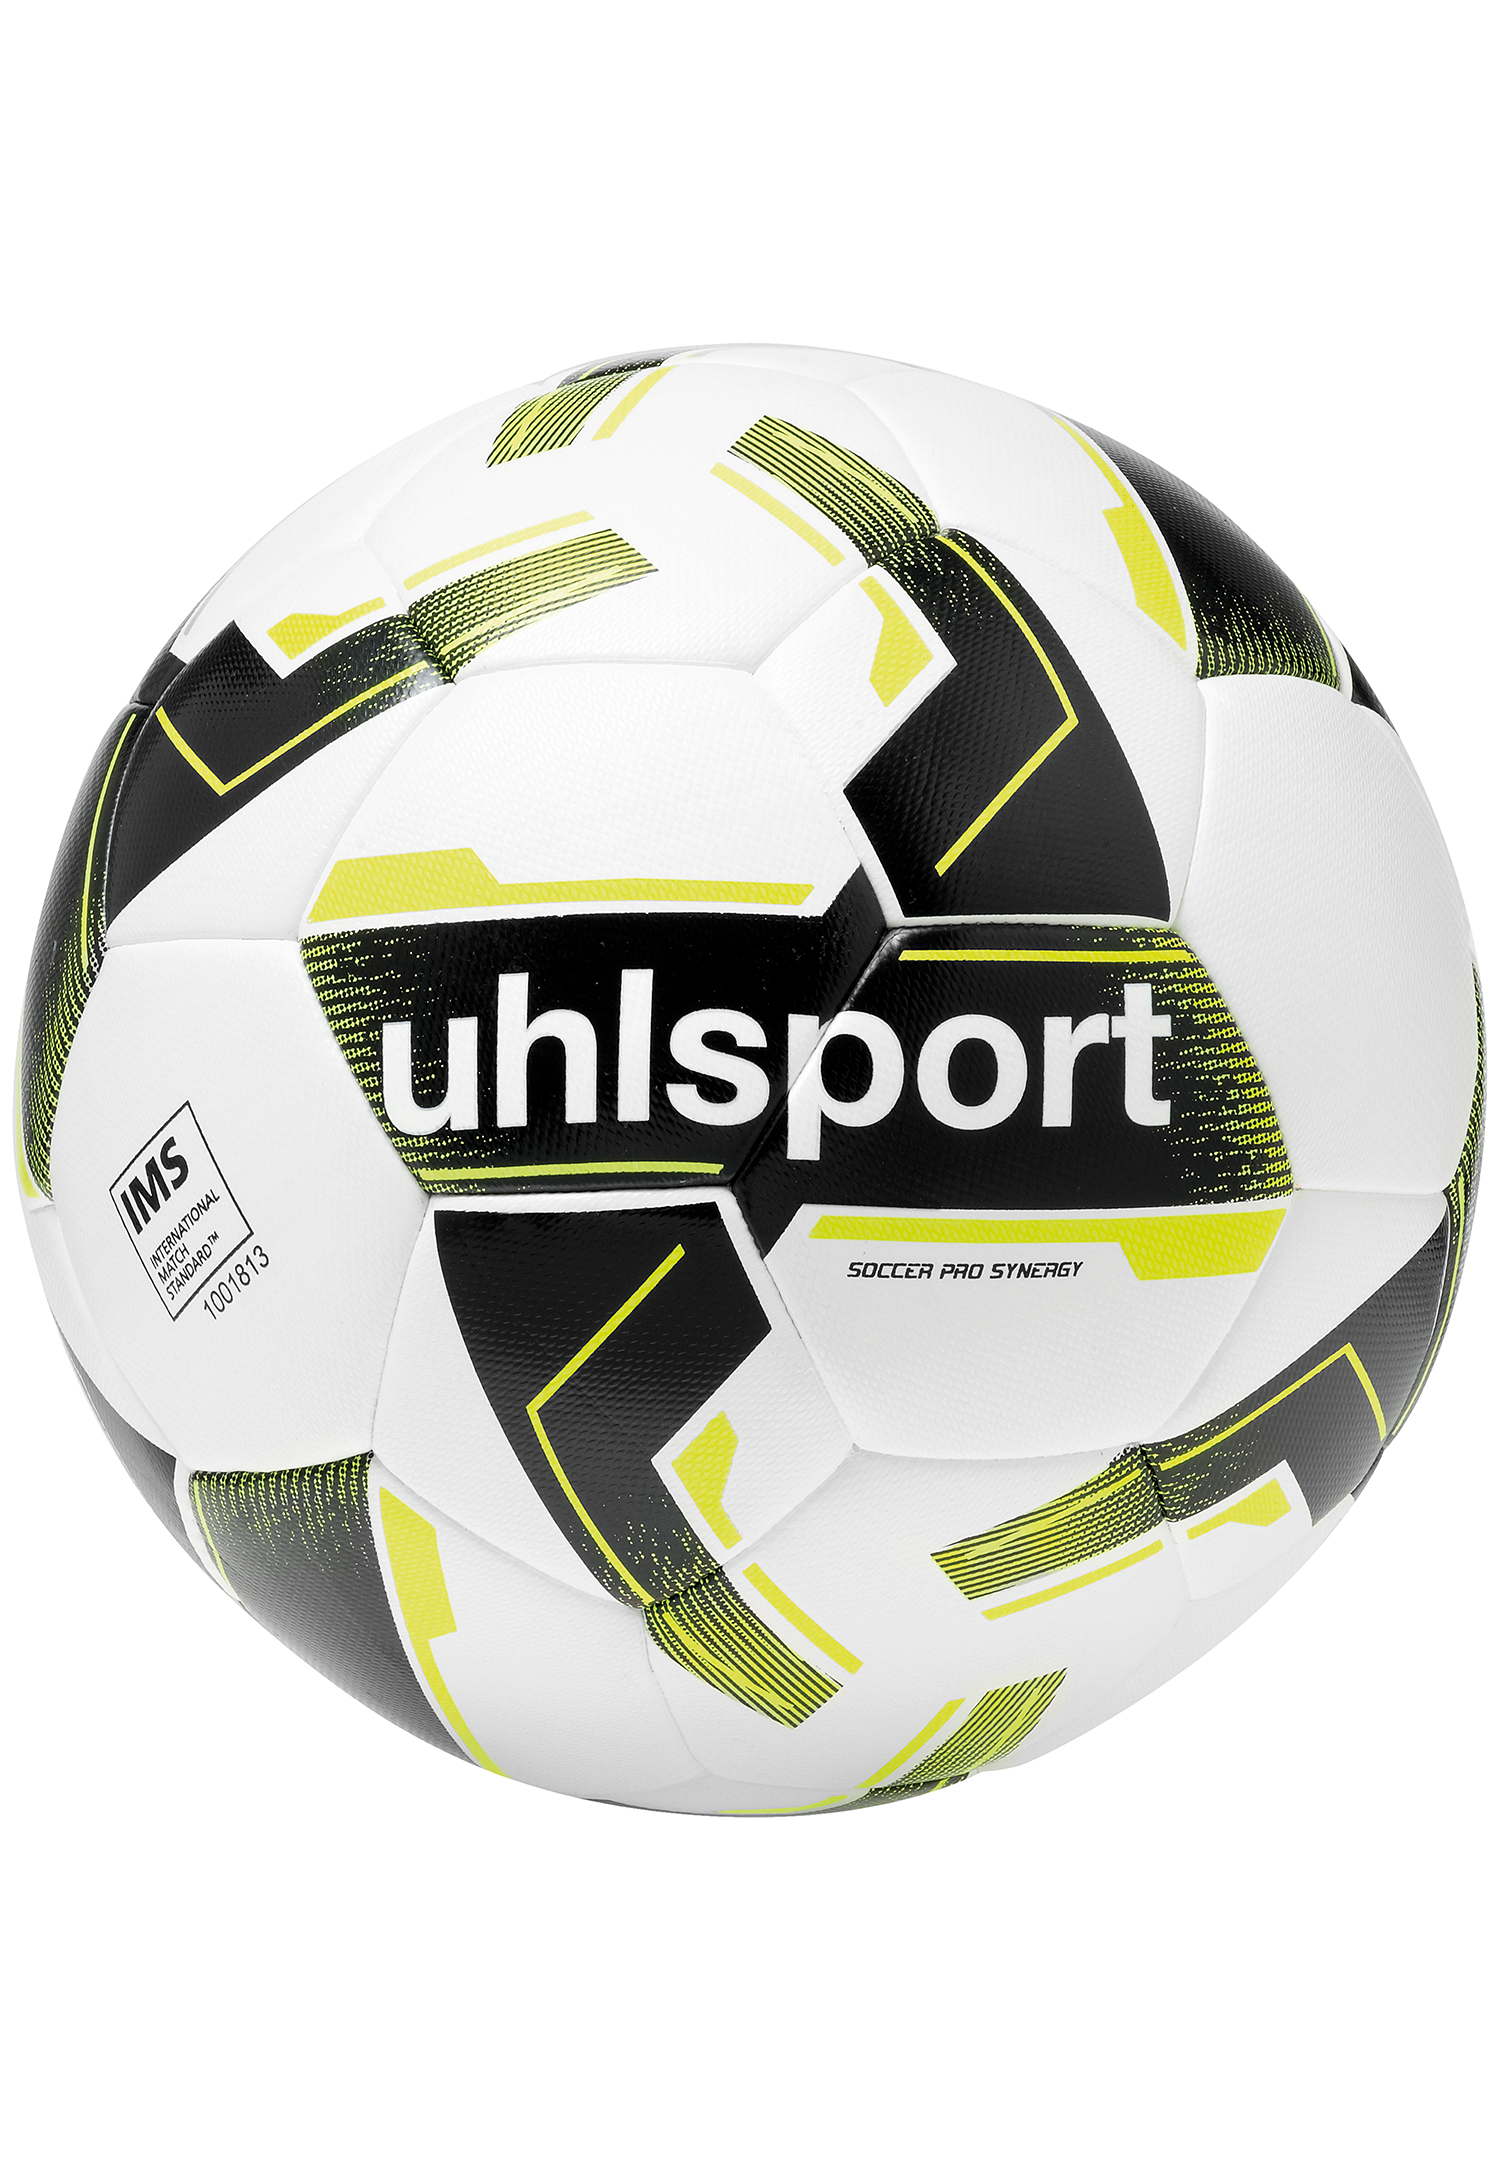 Uhlsport SOCCER PRO SYNERGY Fussball Spiel- und Training Ball 100171901 Gr. 5